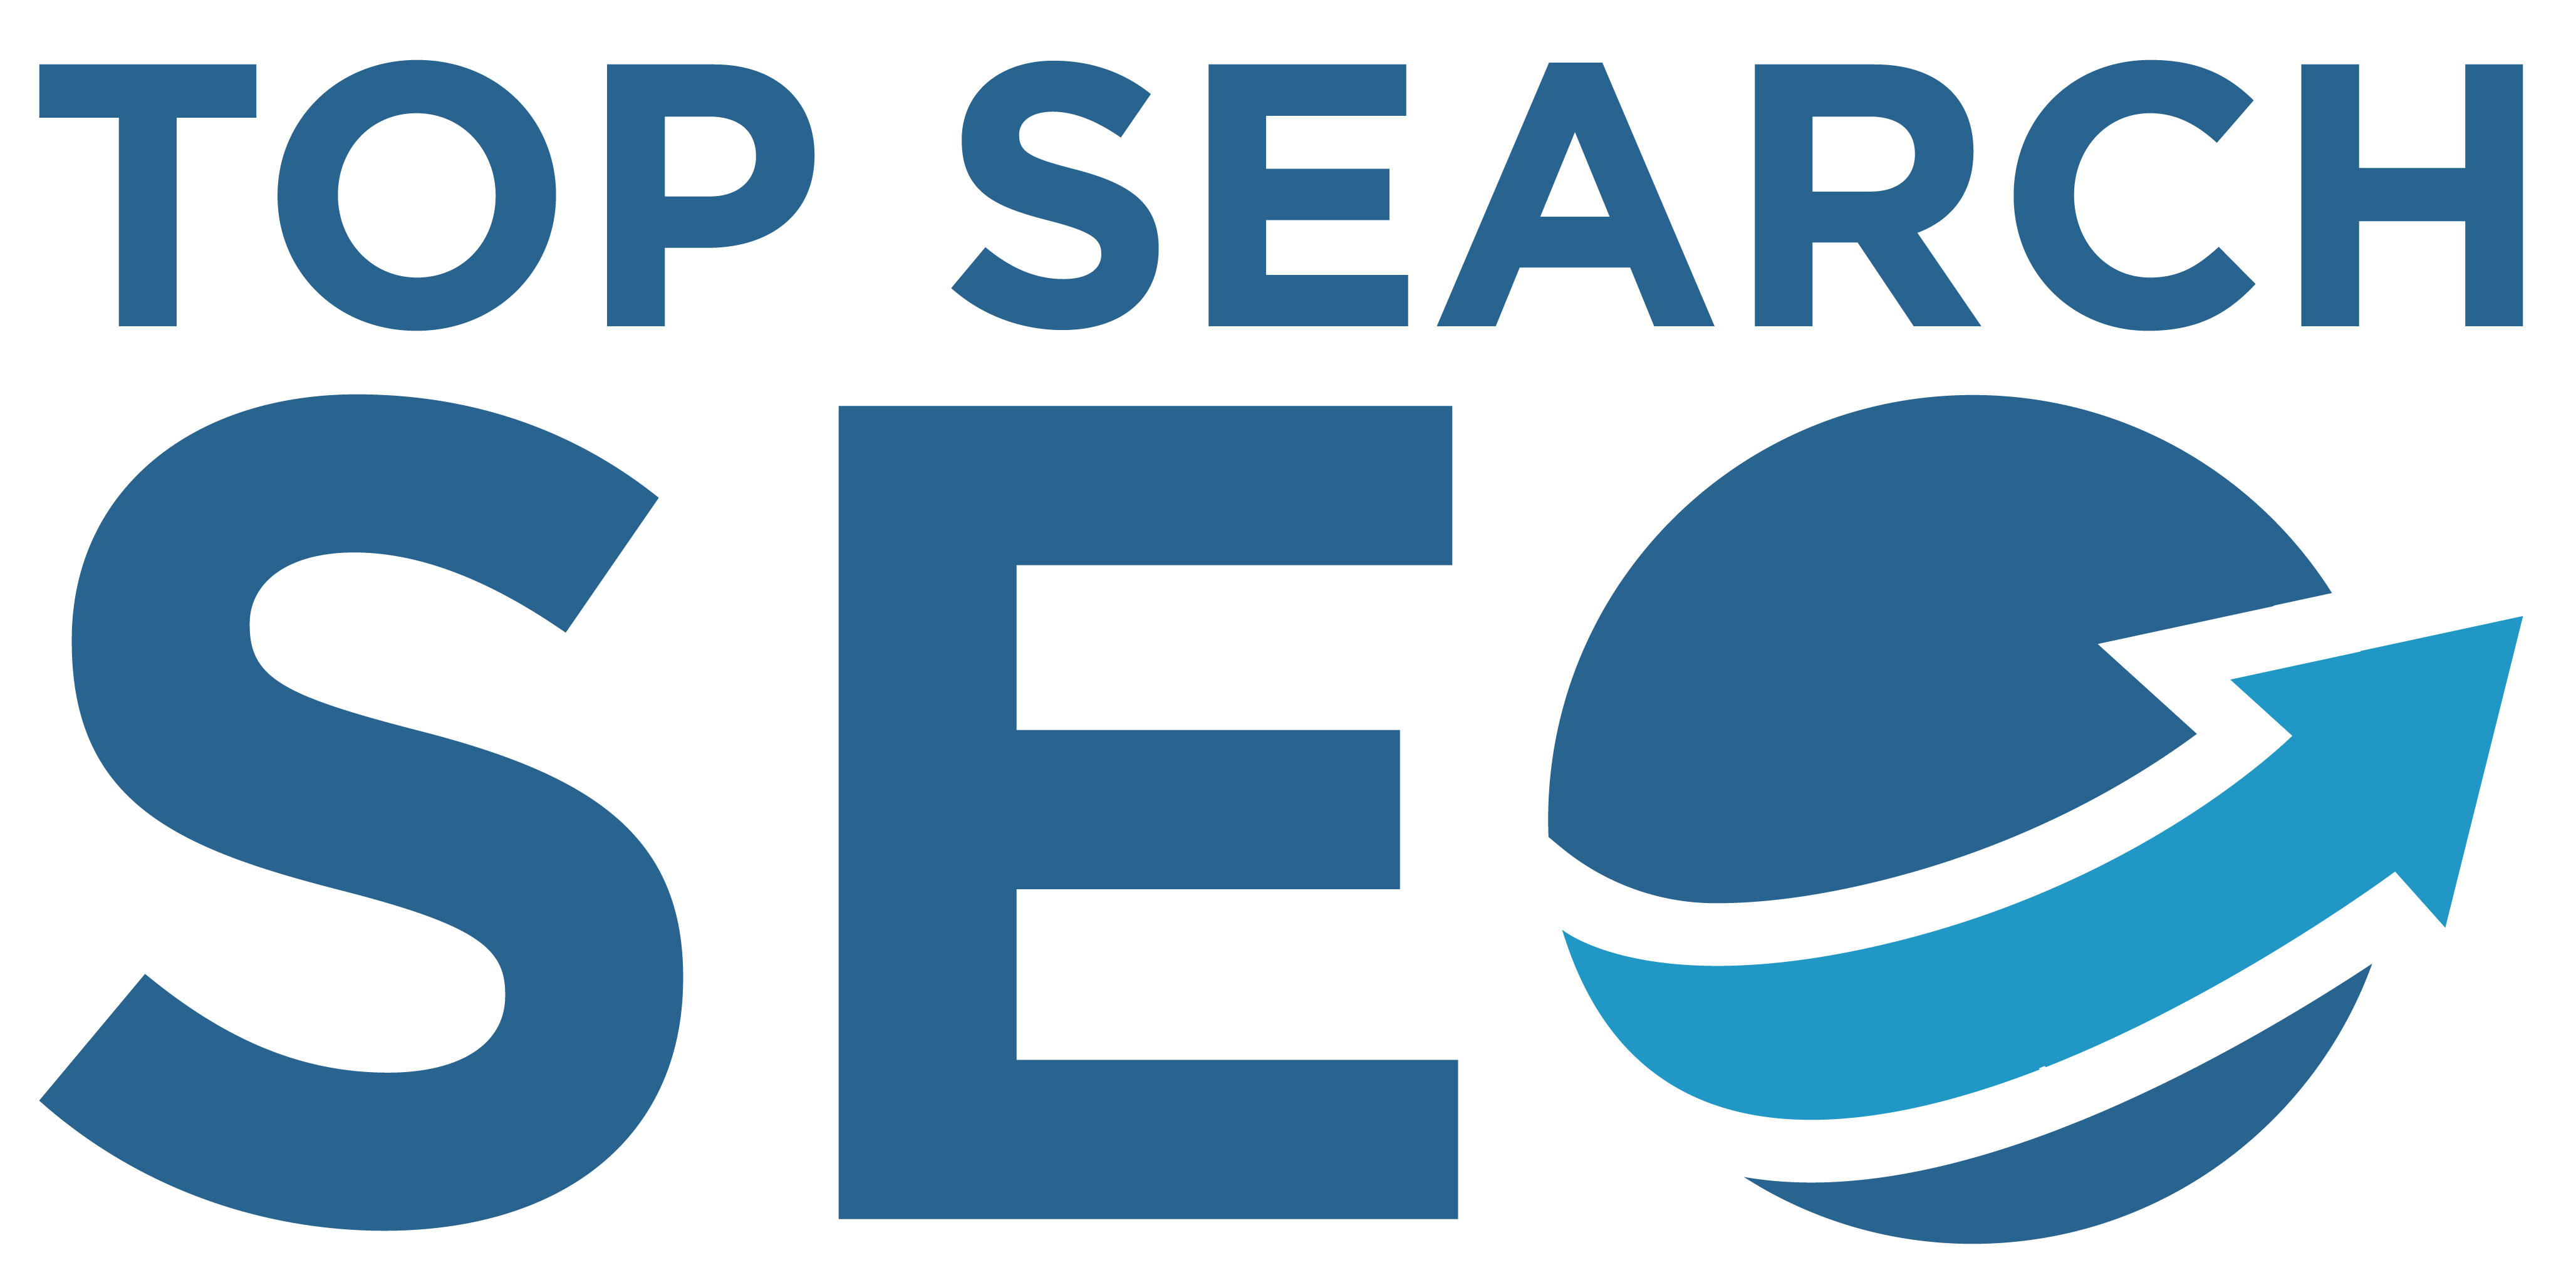 Top Search SEO